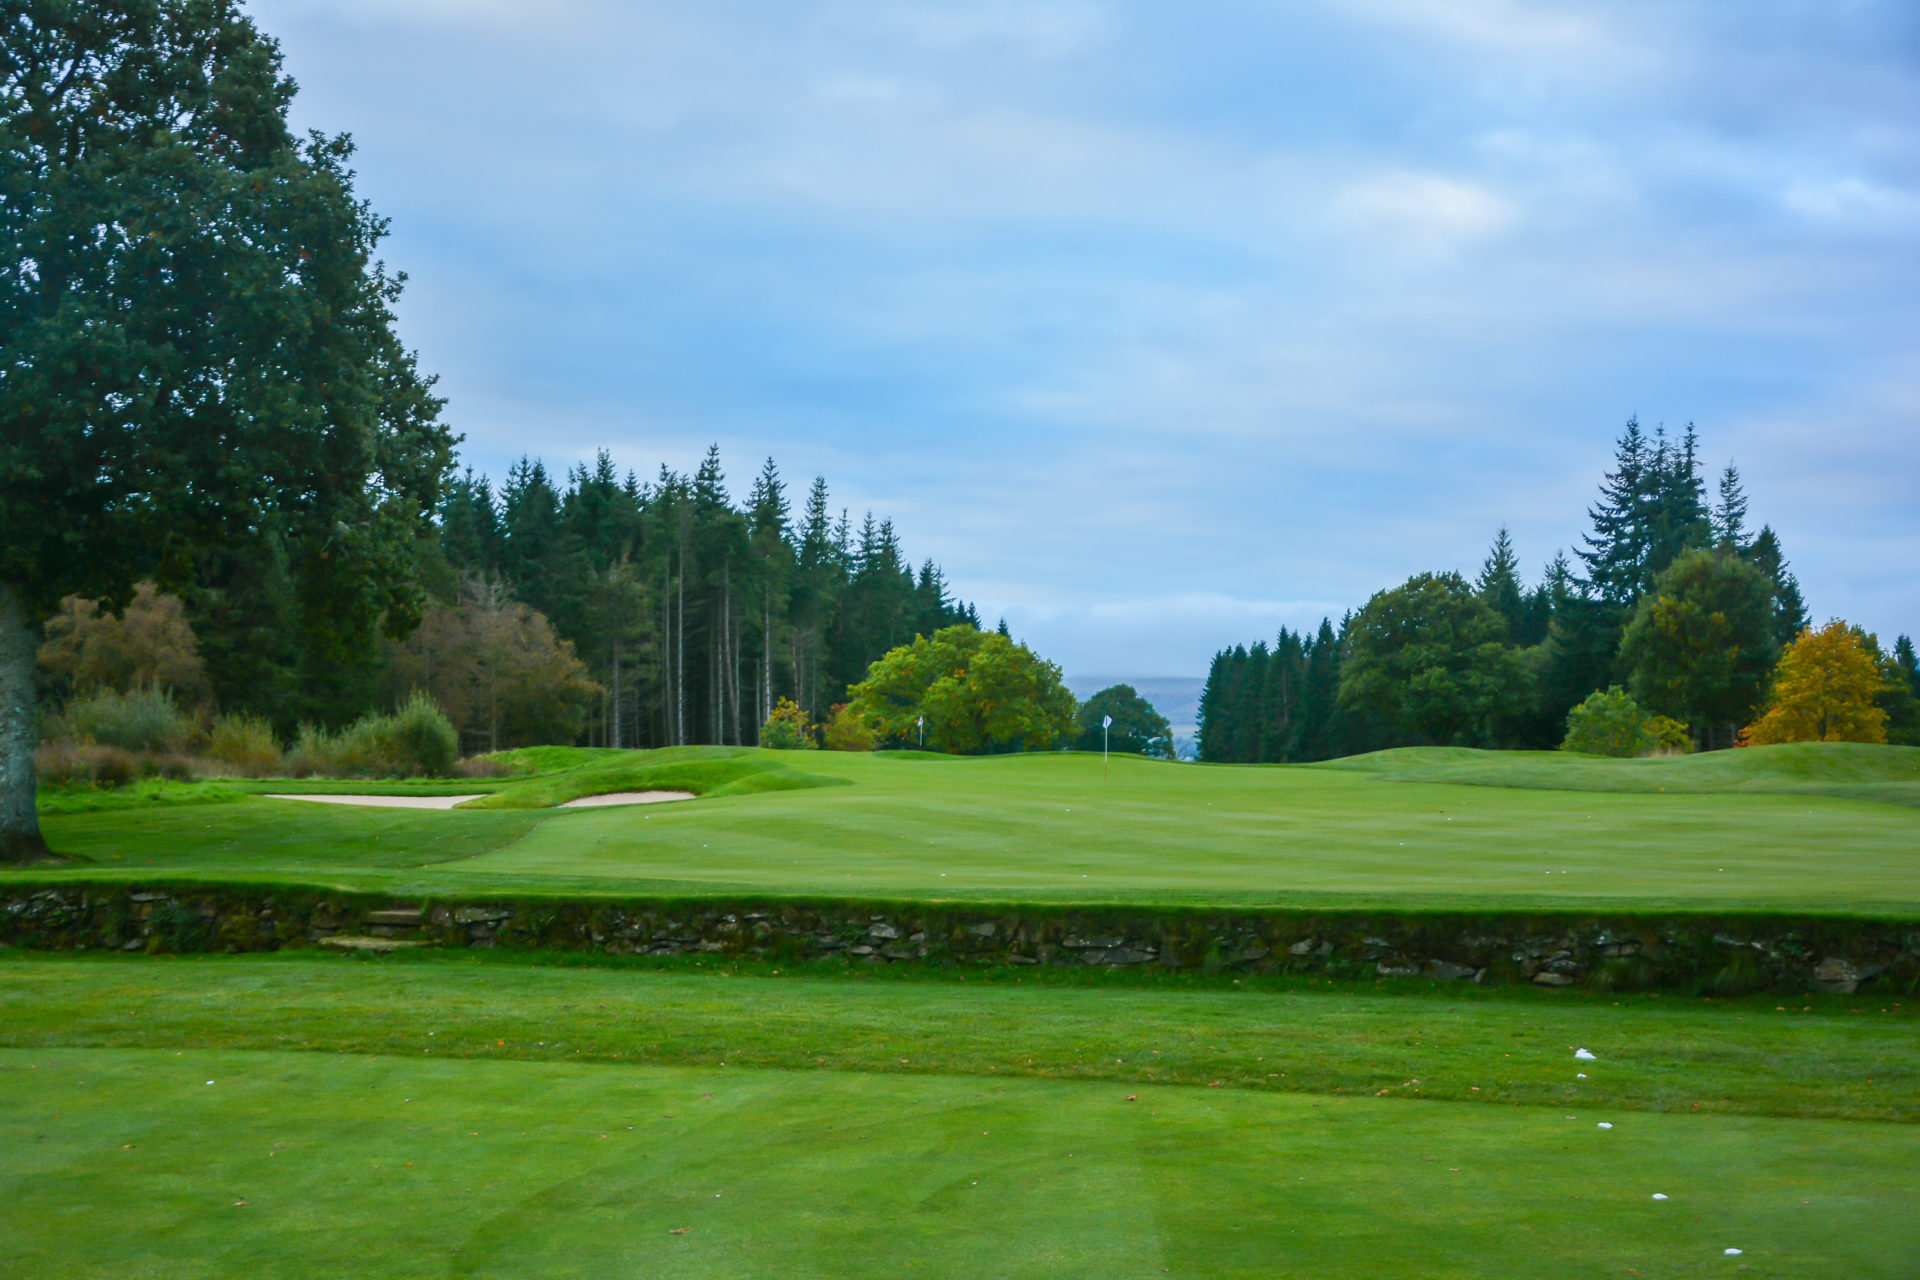 The second hold of Loch Lomond Golf Club.